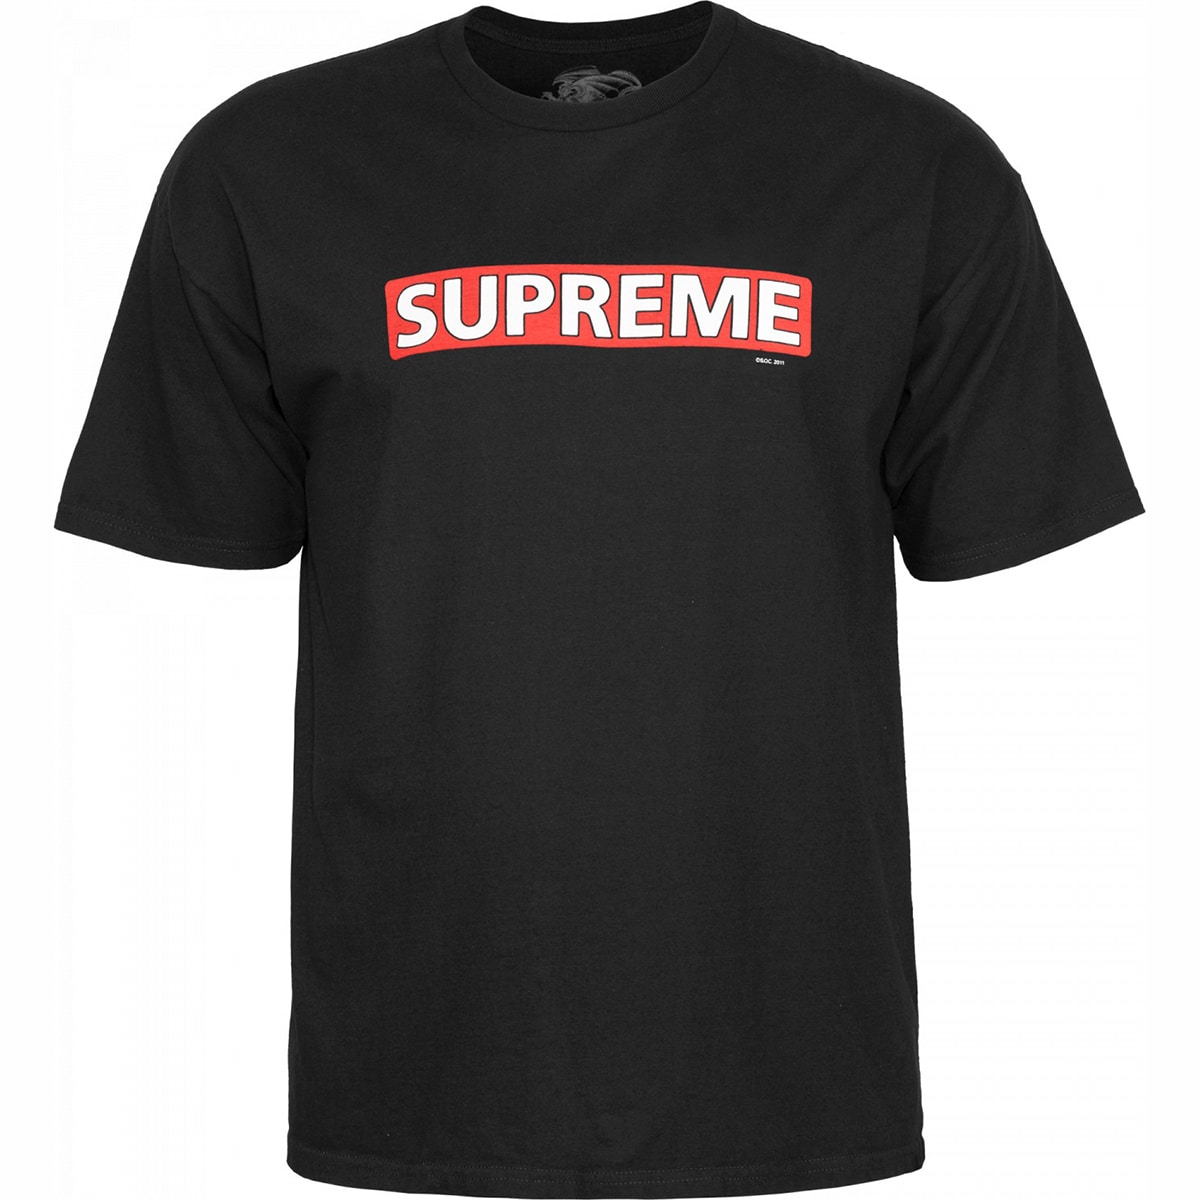 T-shirt Powell Peralta Supreme noir